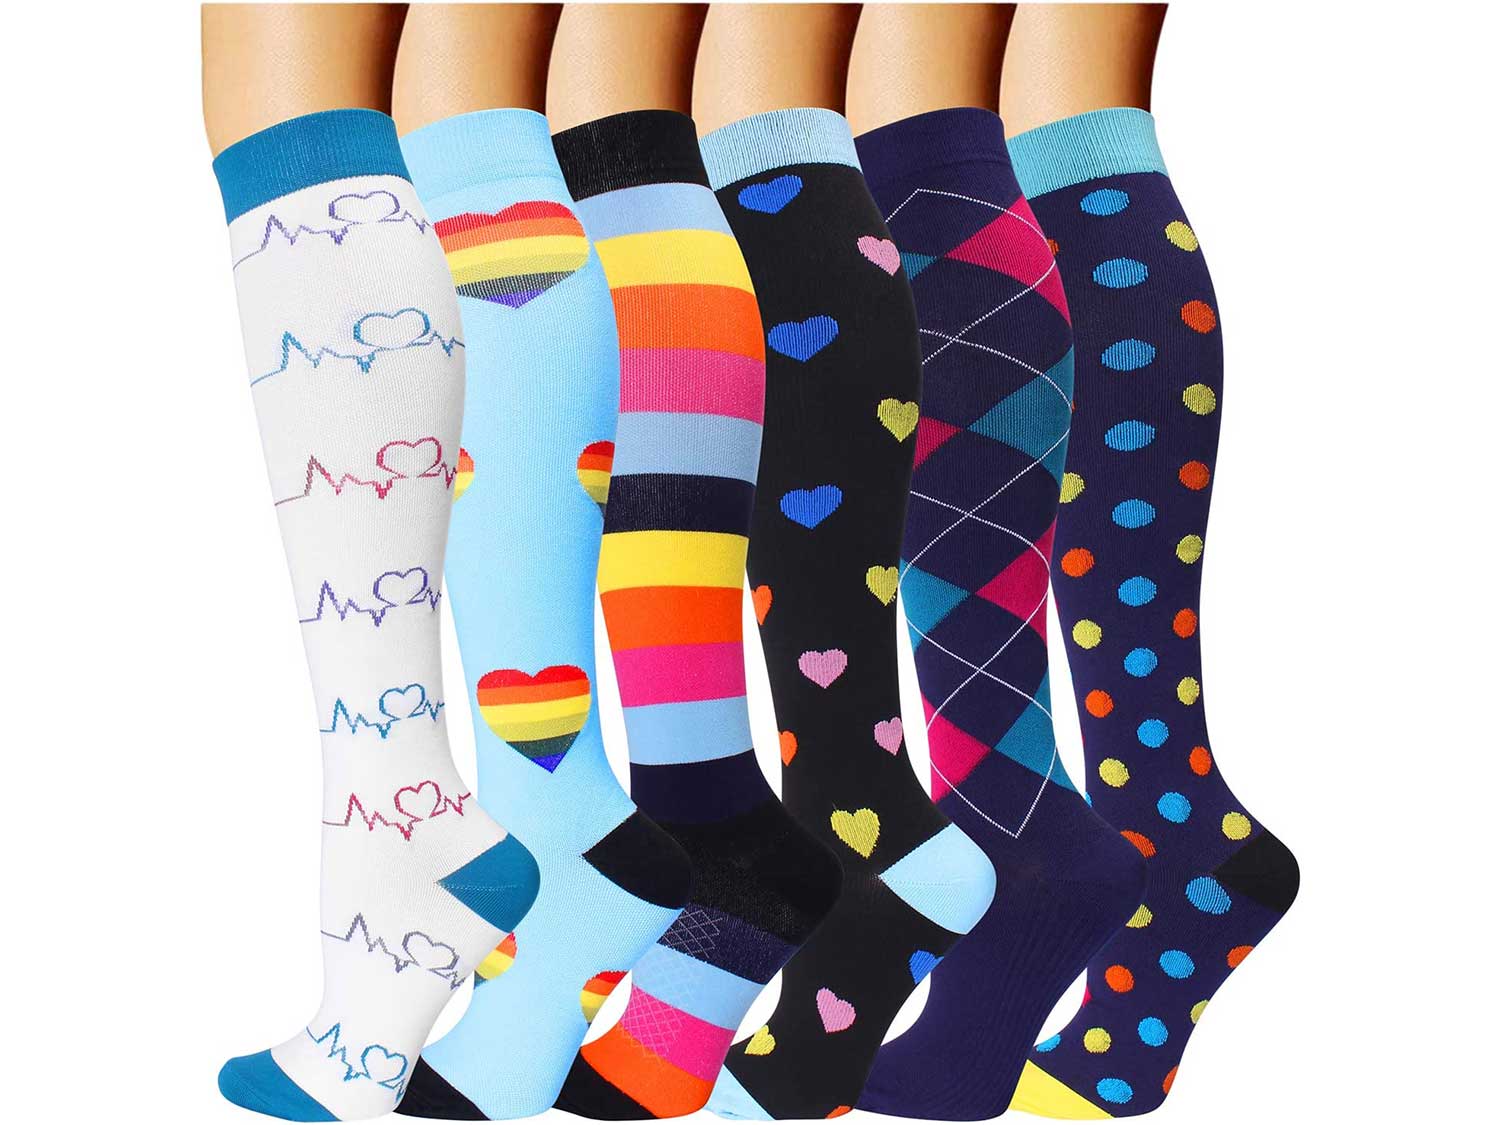 6 Pairs Compression Socks for Men and Women 20-30 mmHg Nursing Athletic Travel Flight Socks Shin Splints Knee High (Multi-Colored, Small-Medium)